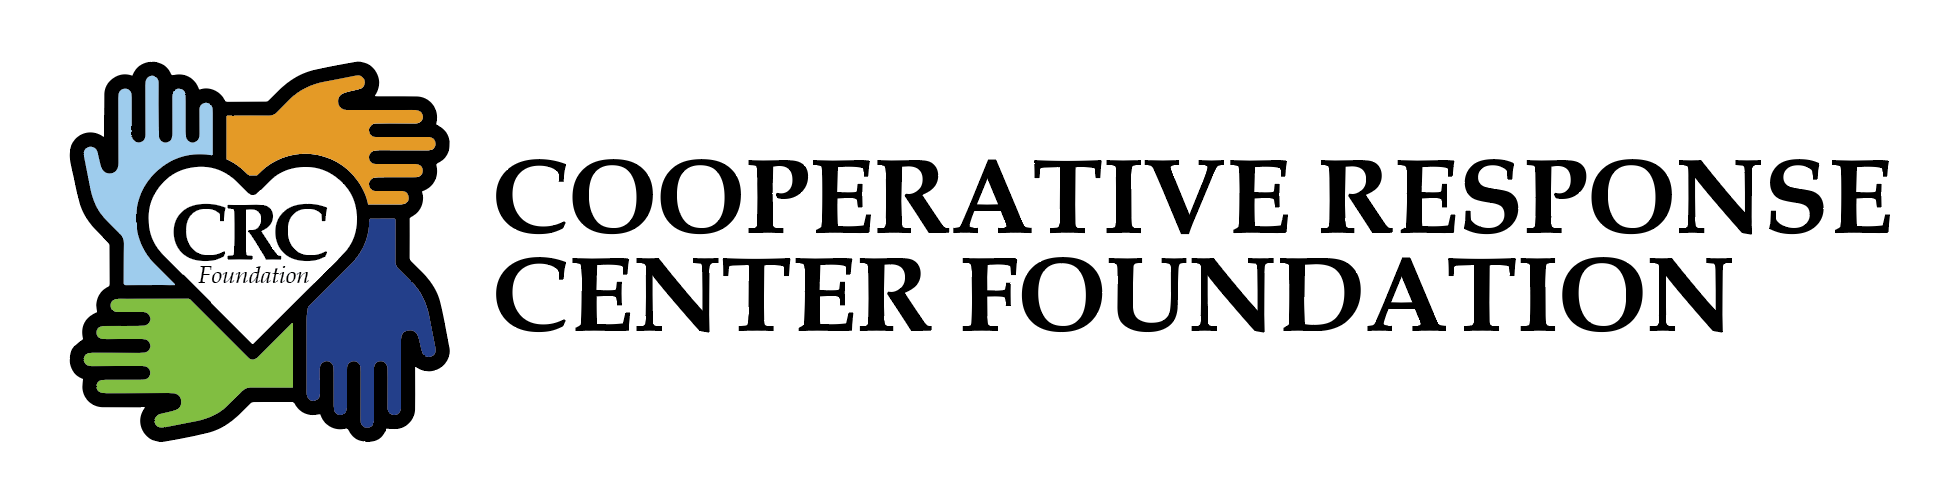 Cooperative Response Center Foundation